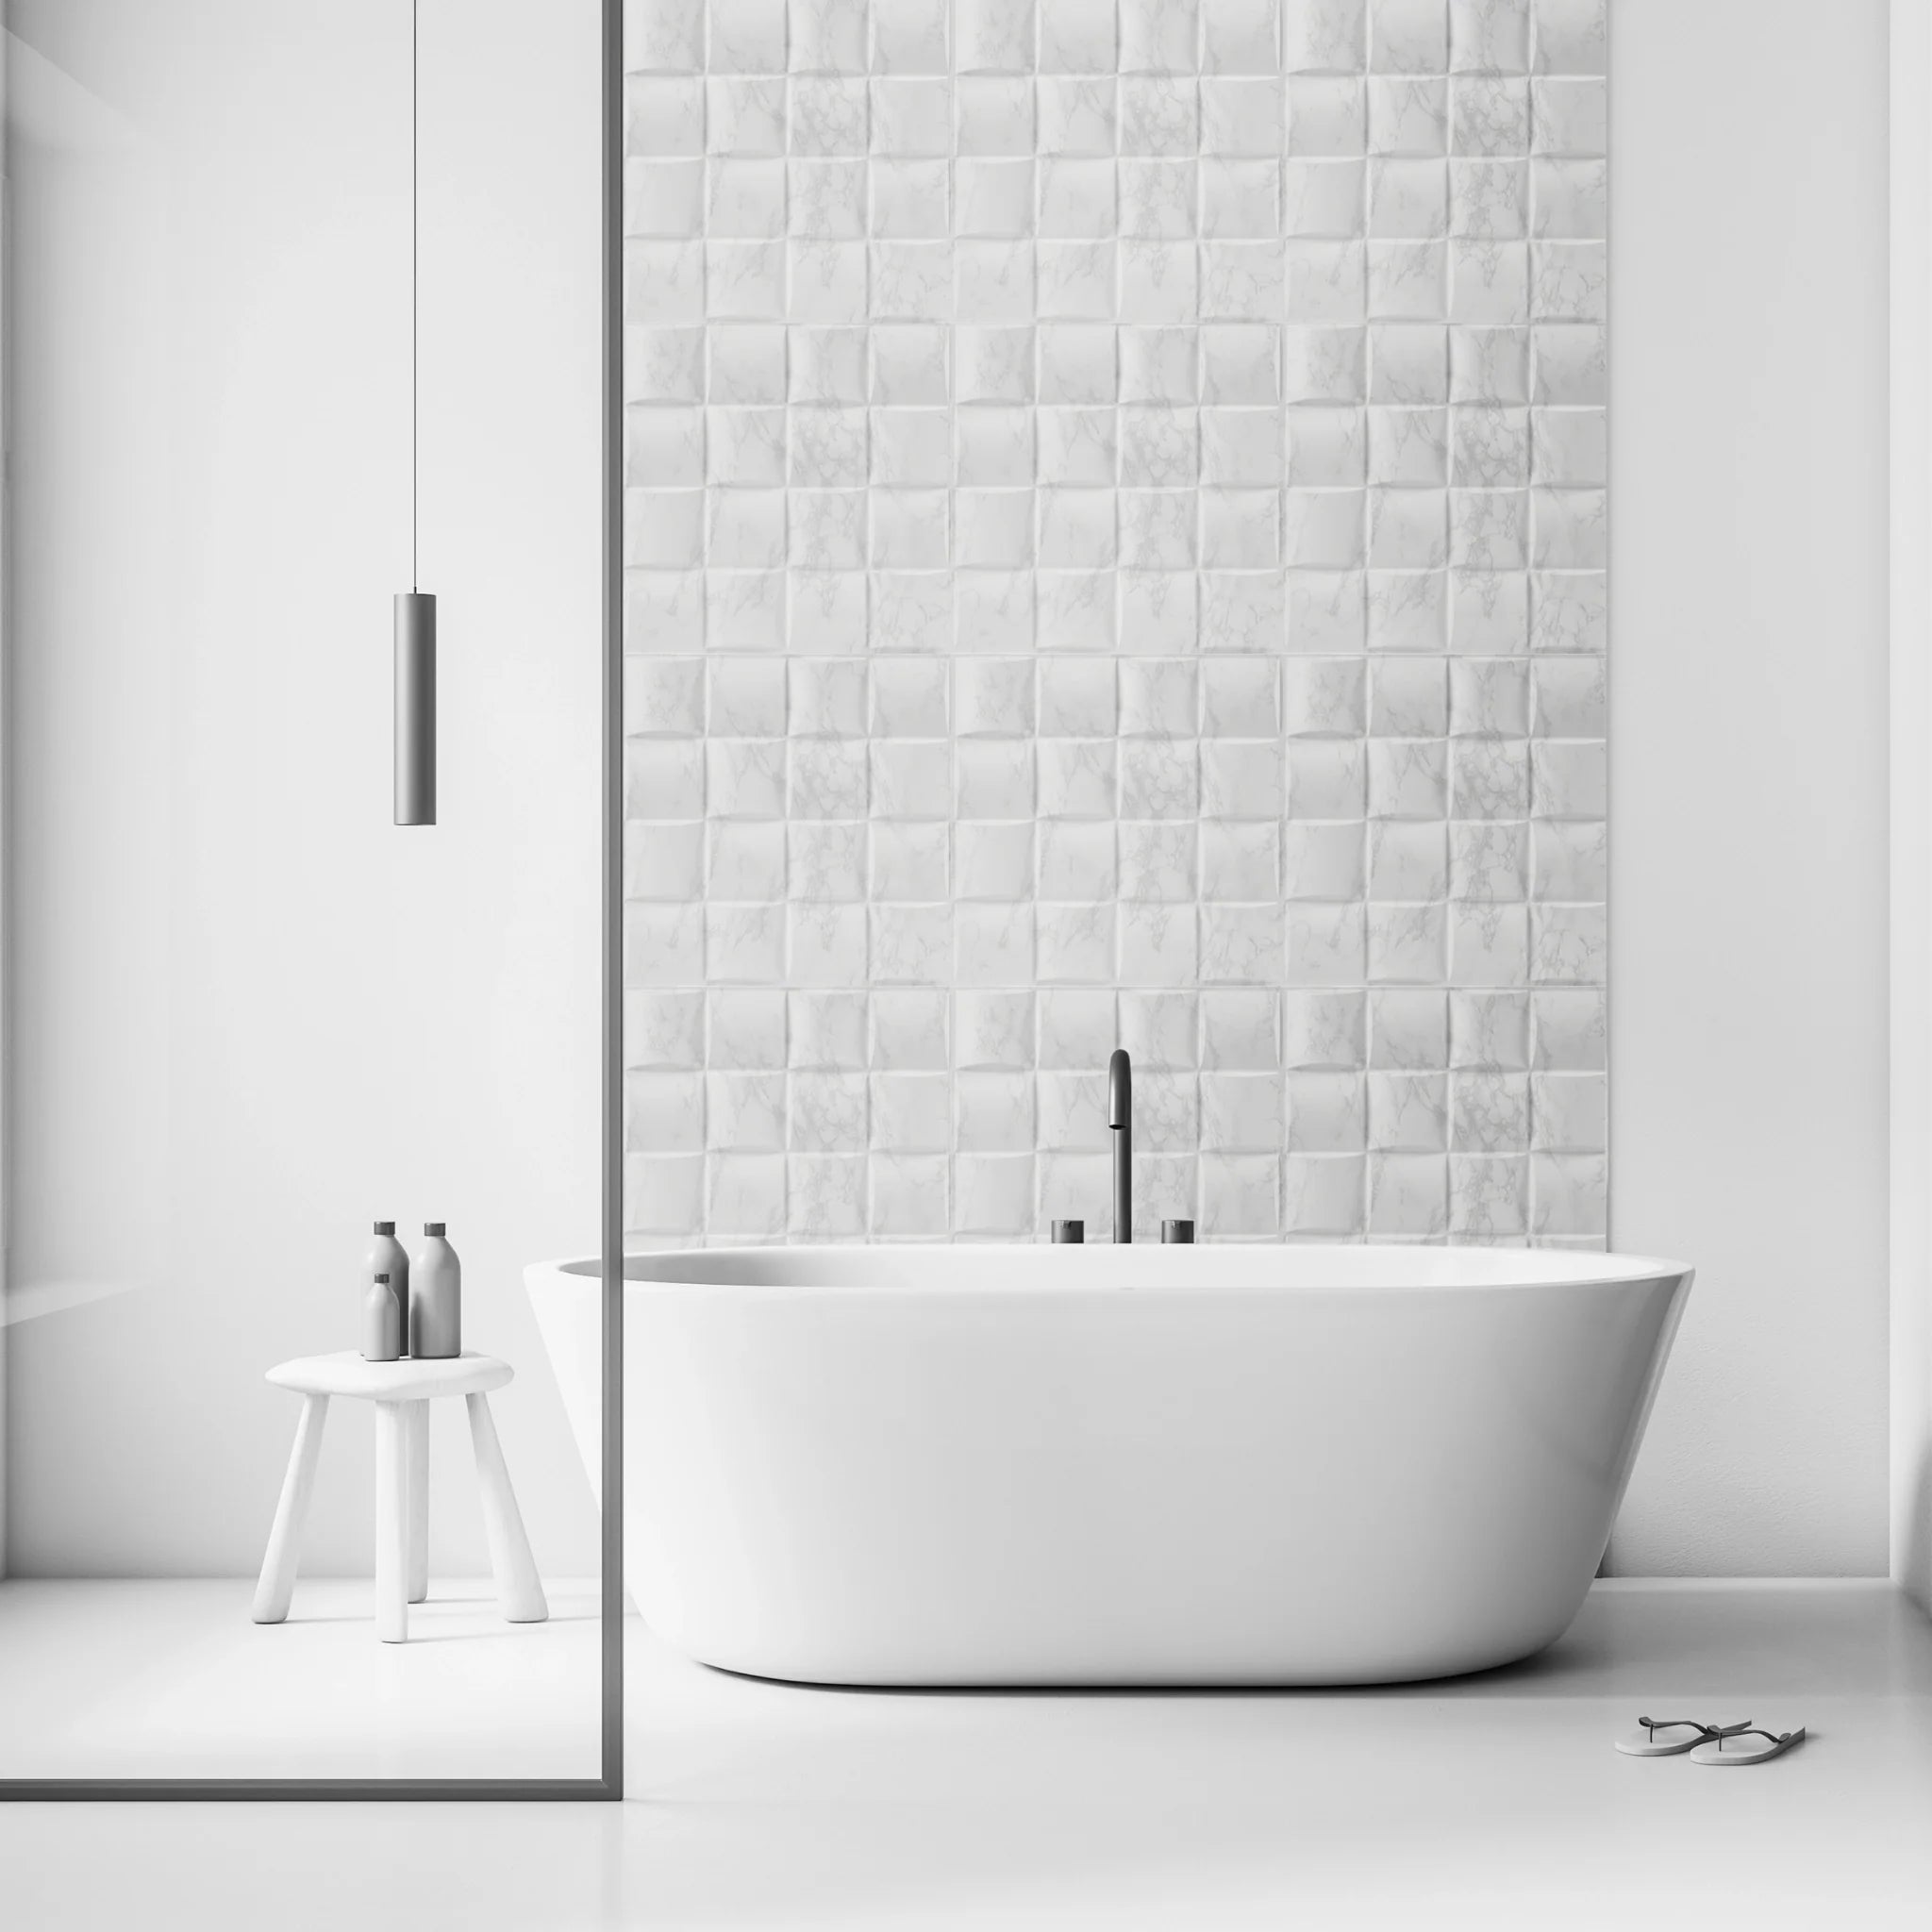 Marble 50x50 cm PVC wall panel in minimalist bathroom setting